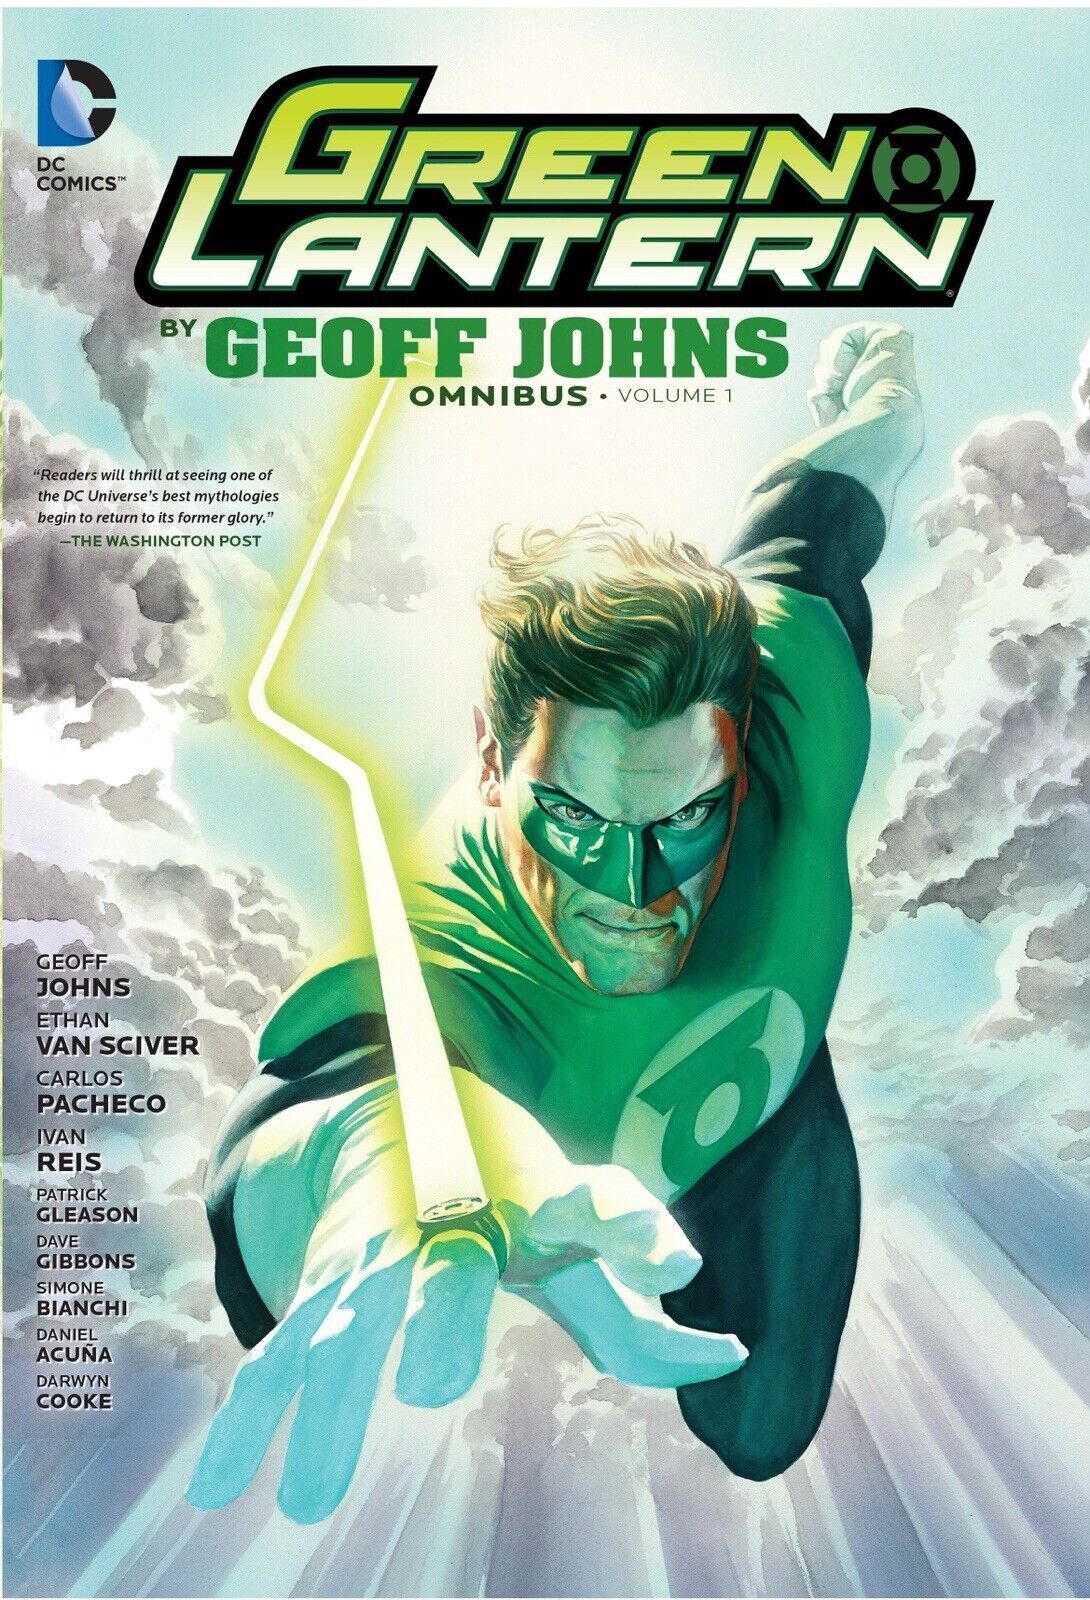 Green Lantern by Geoff Johns Omnibus #1 (DC Comics March 2015)